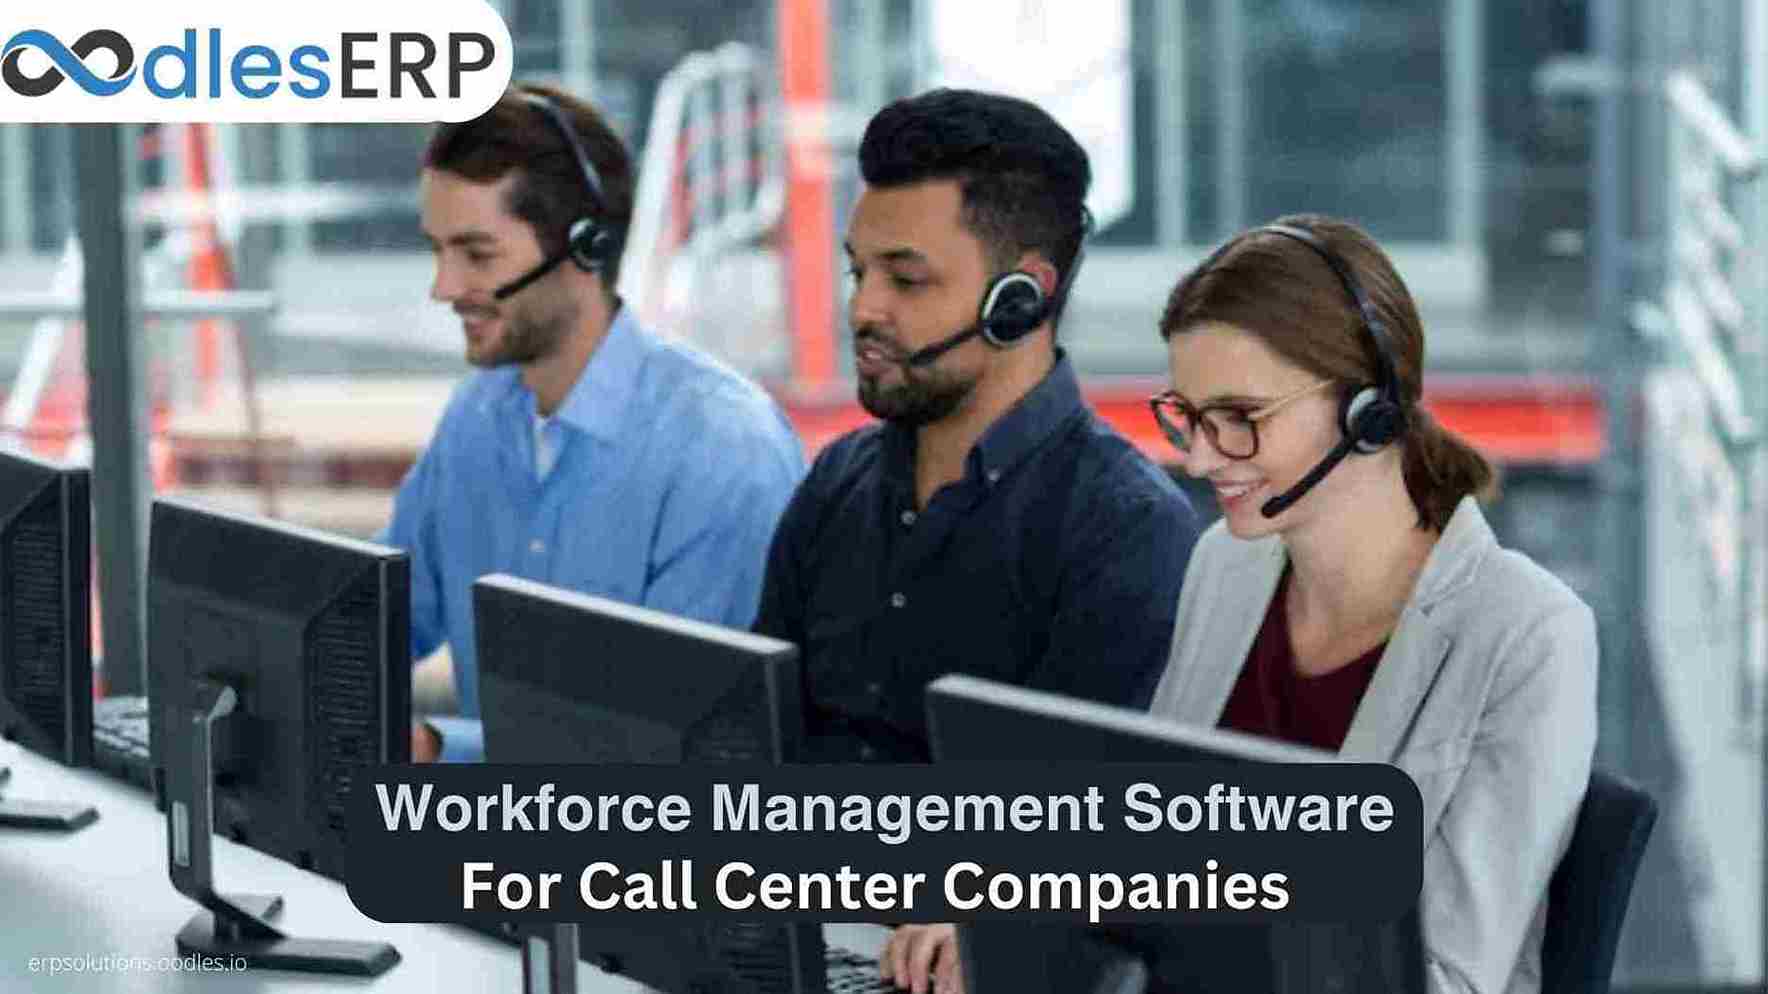 Workforce Management Software Development For Call Center Companies